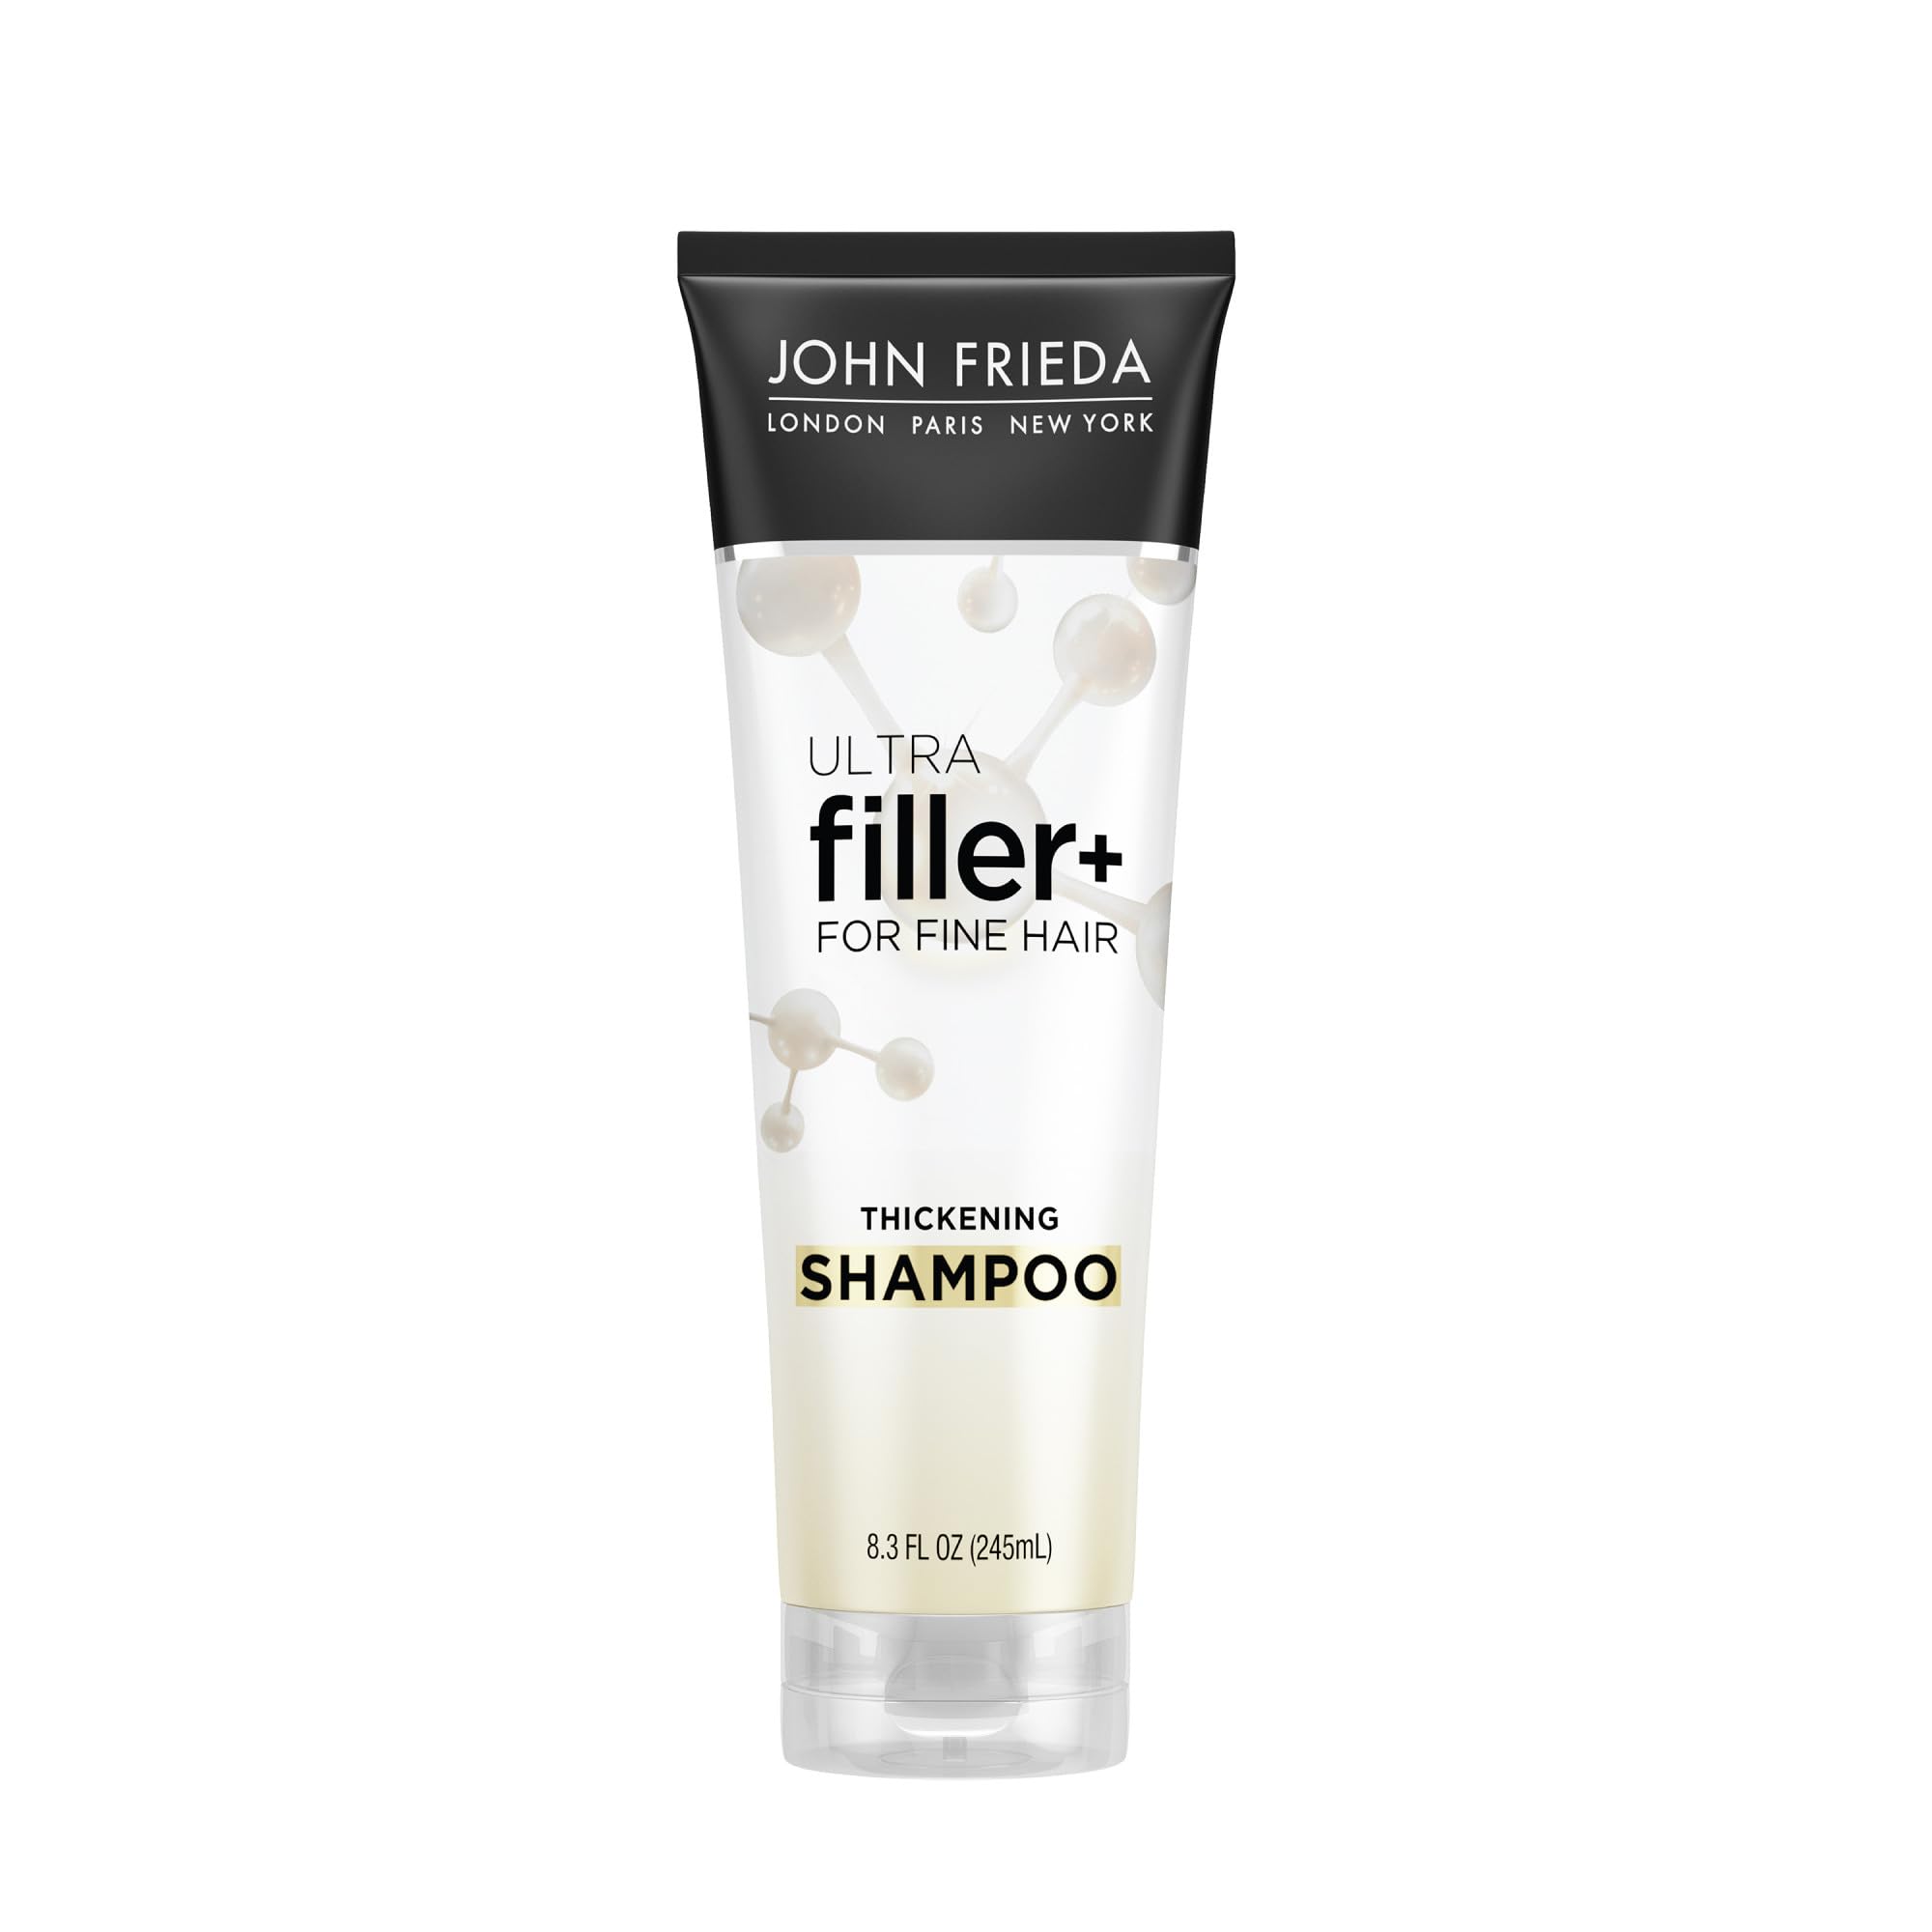 John Frieda ULTRAfiller+ Thickening Shampoo for Fine Hair, Volumizing Shampoo, Biotin and Hyaluronic Acid Hair Thickening Shampoo for Women and Men, 8.3 Oz